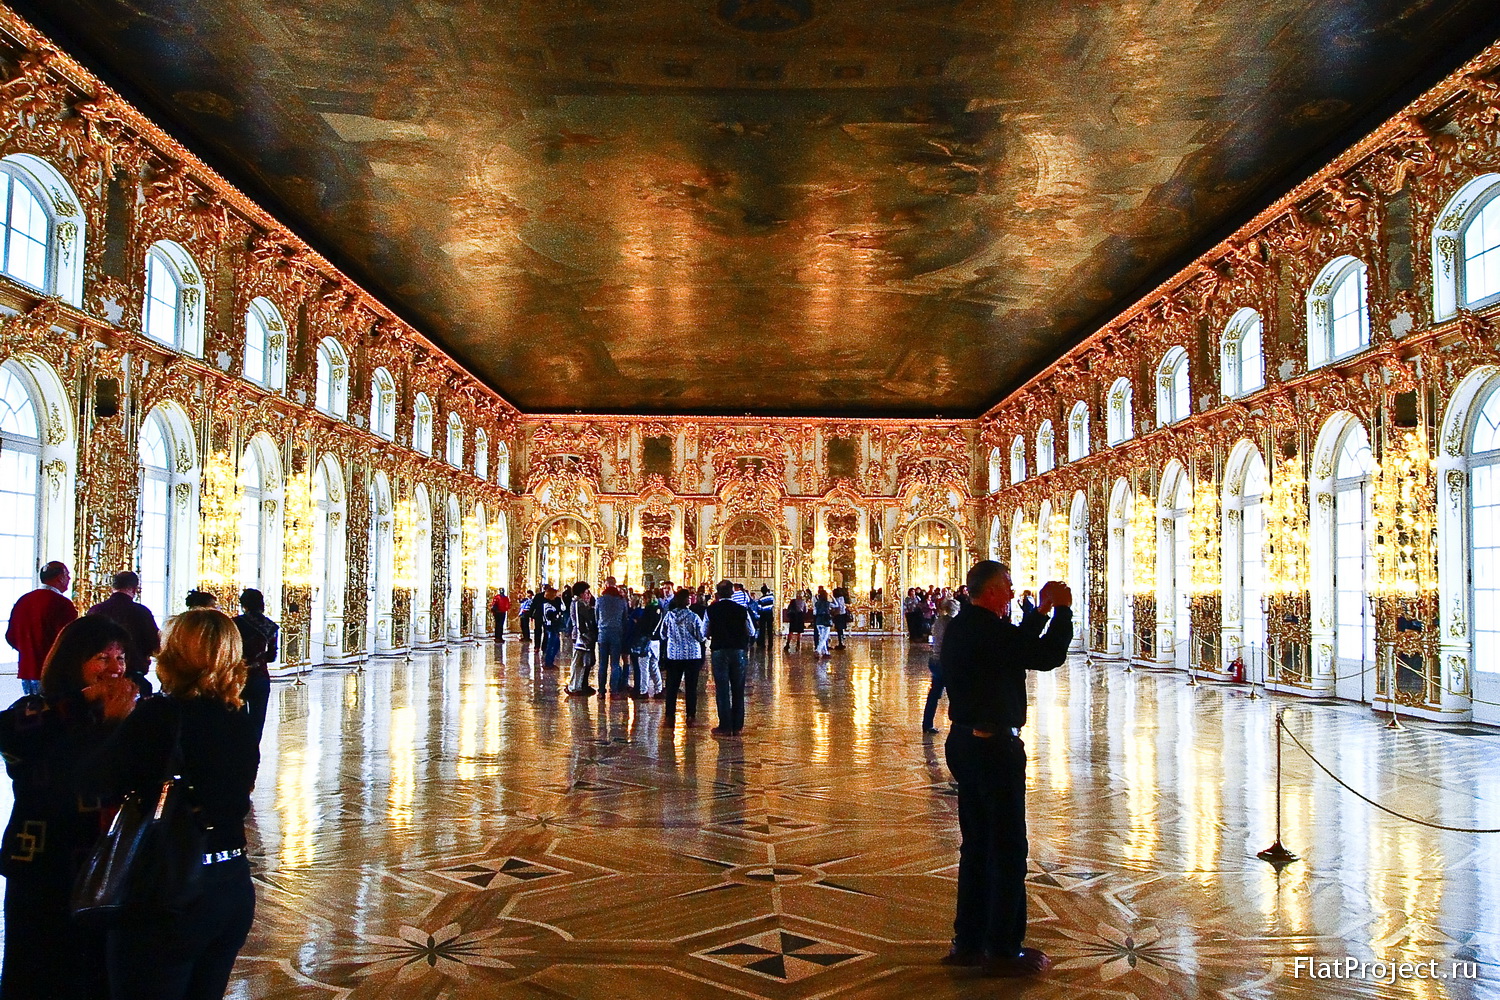 The Catherine Palace interiors – photo 322